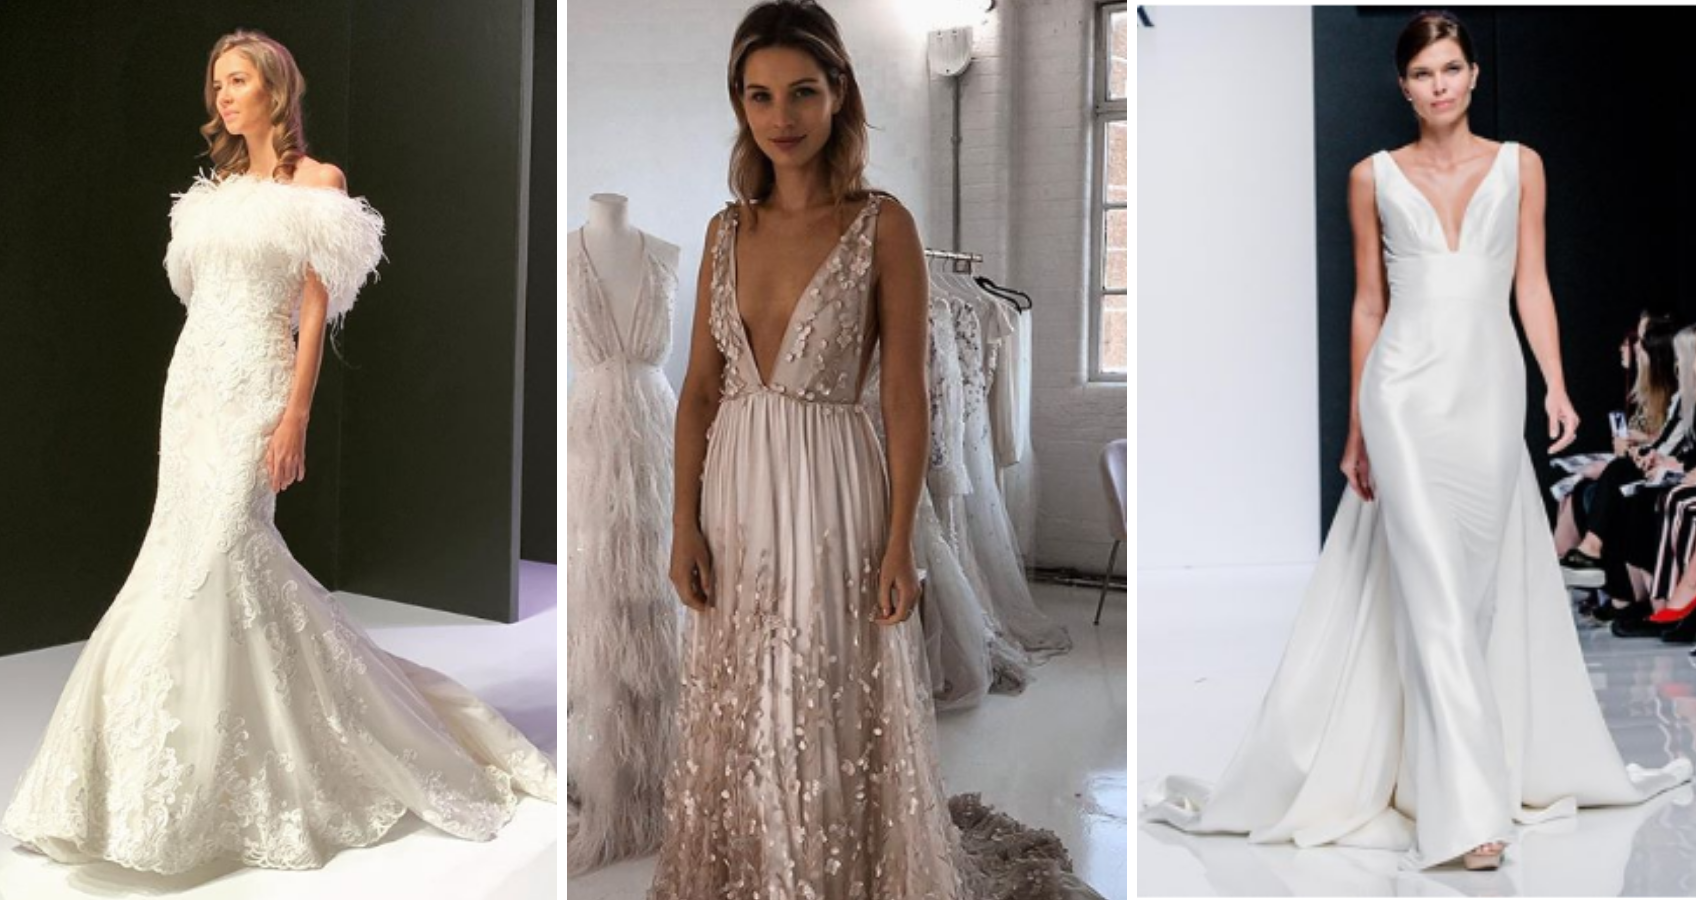 Looks From London Bridal Fashion Week 2019 | WeddingDates Blog ...